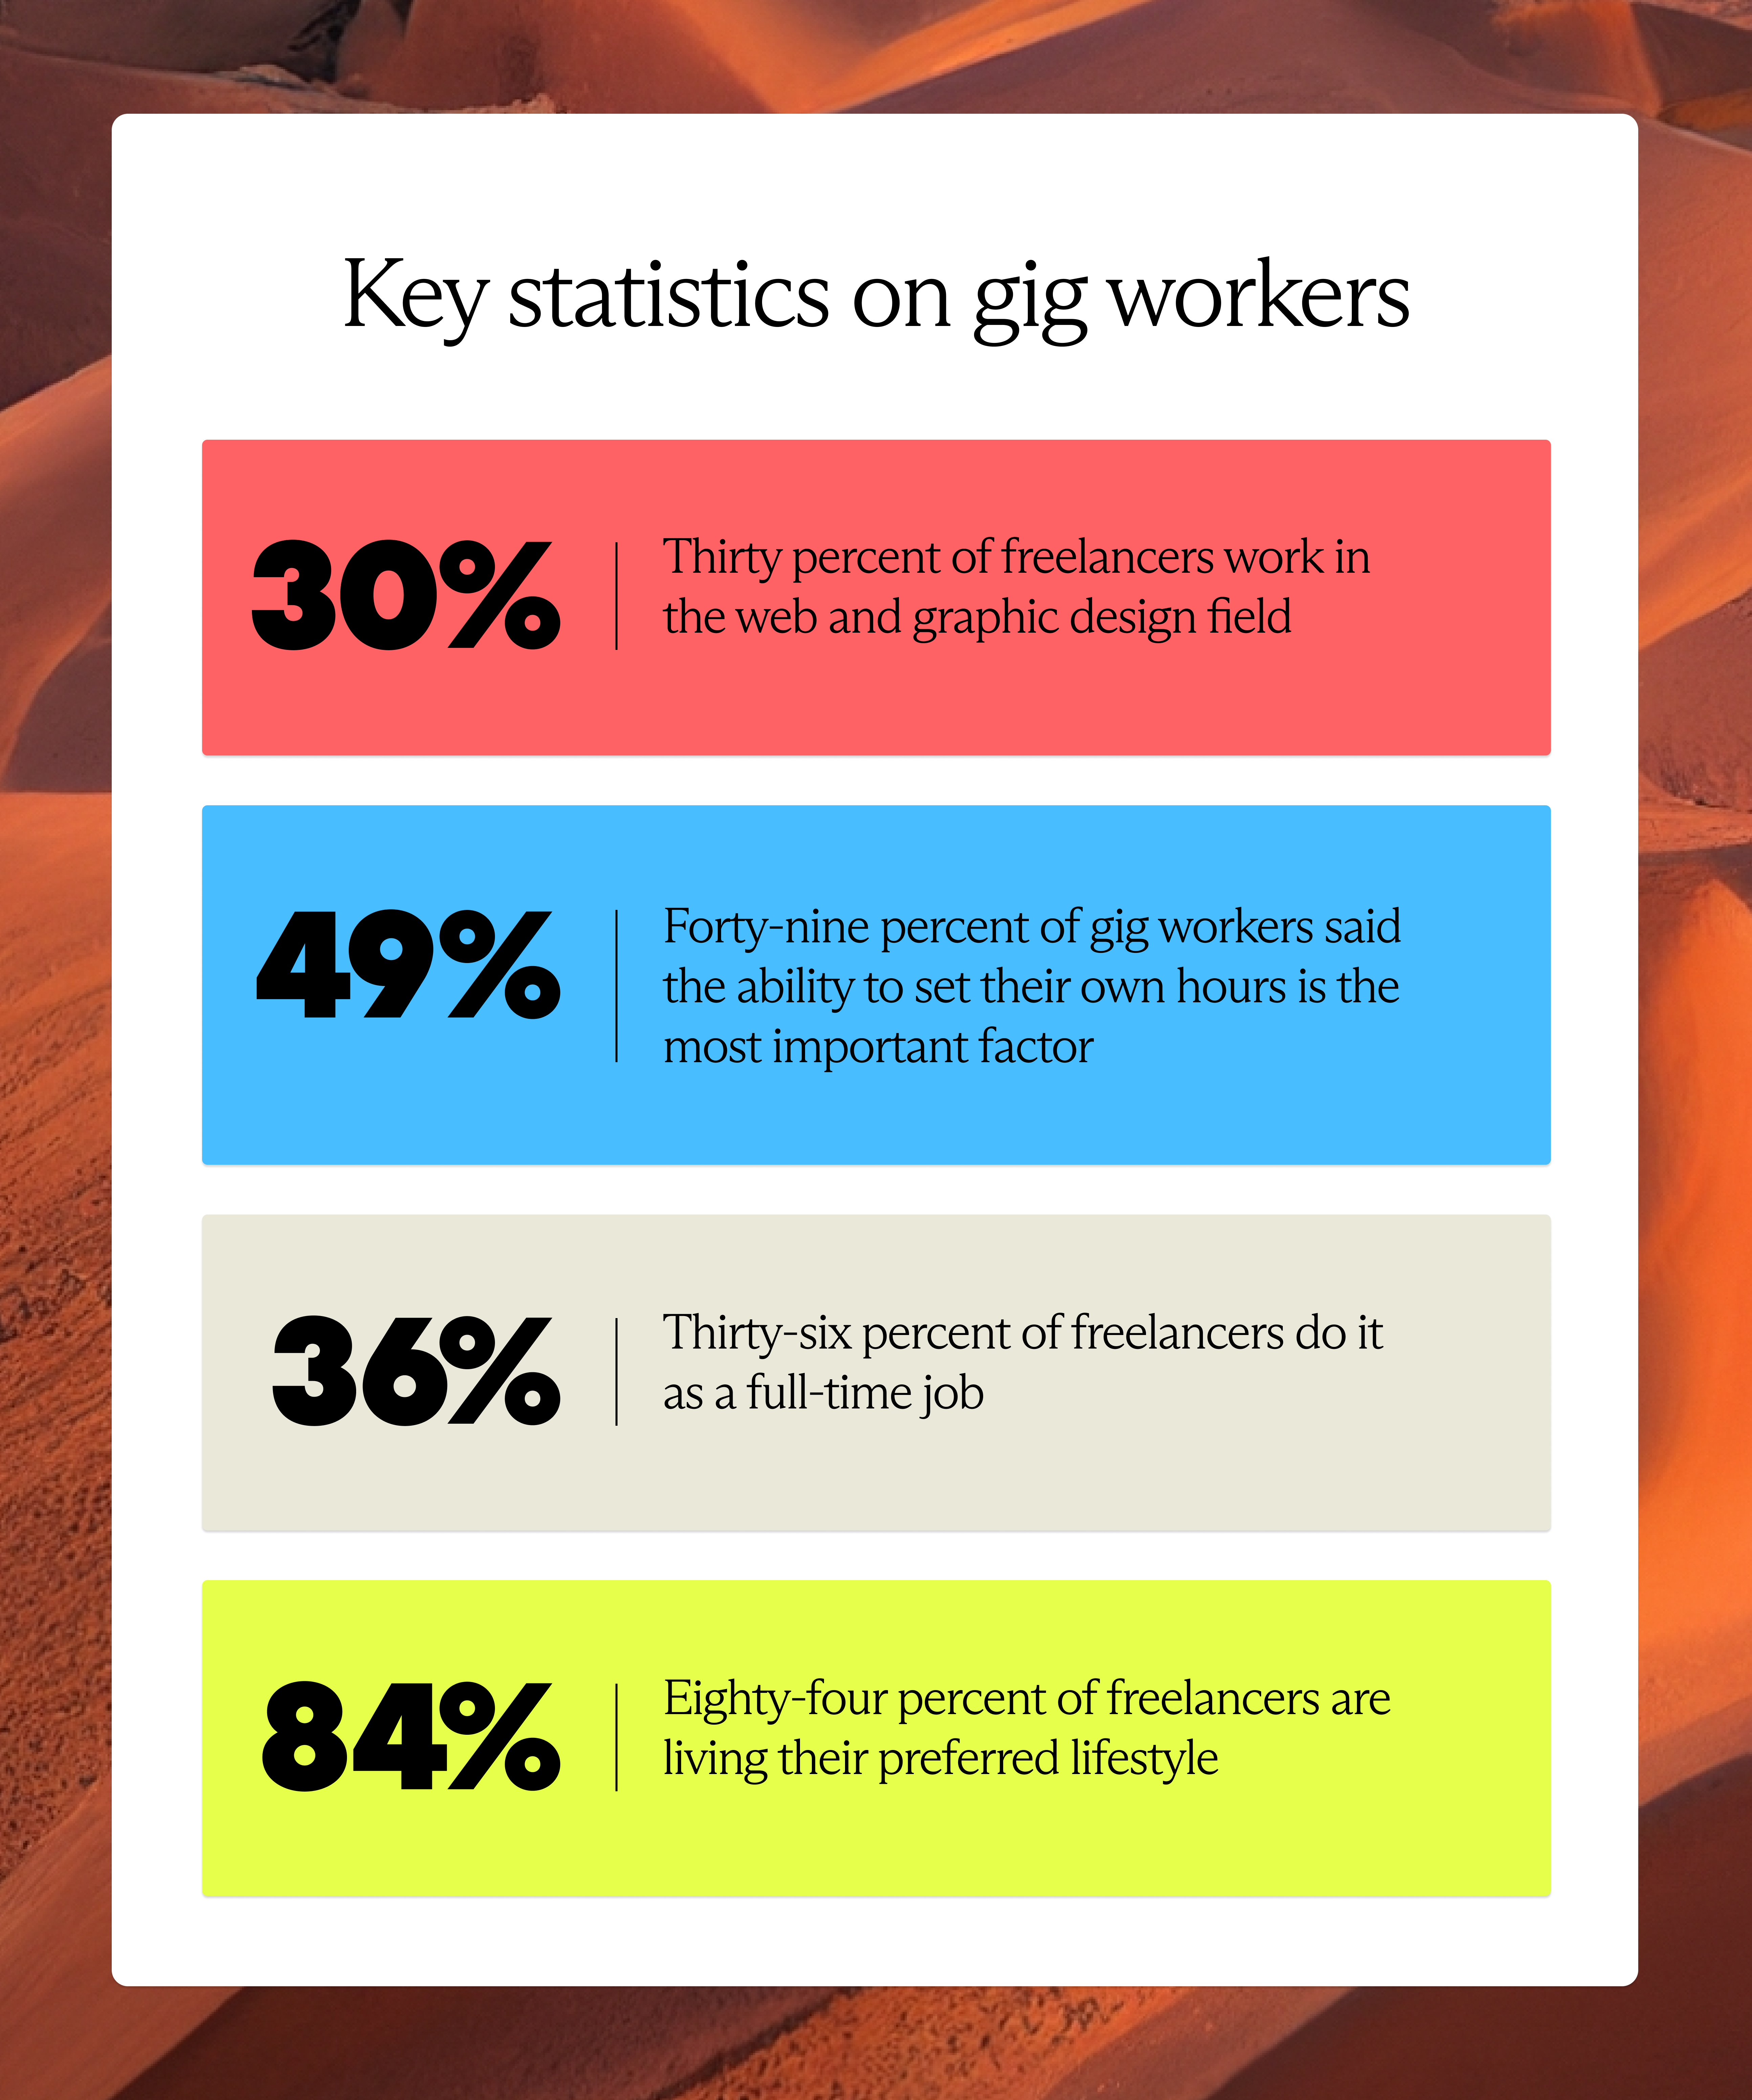 Key statistics on gig workers